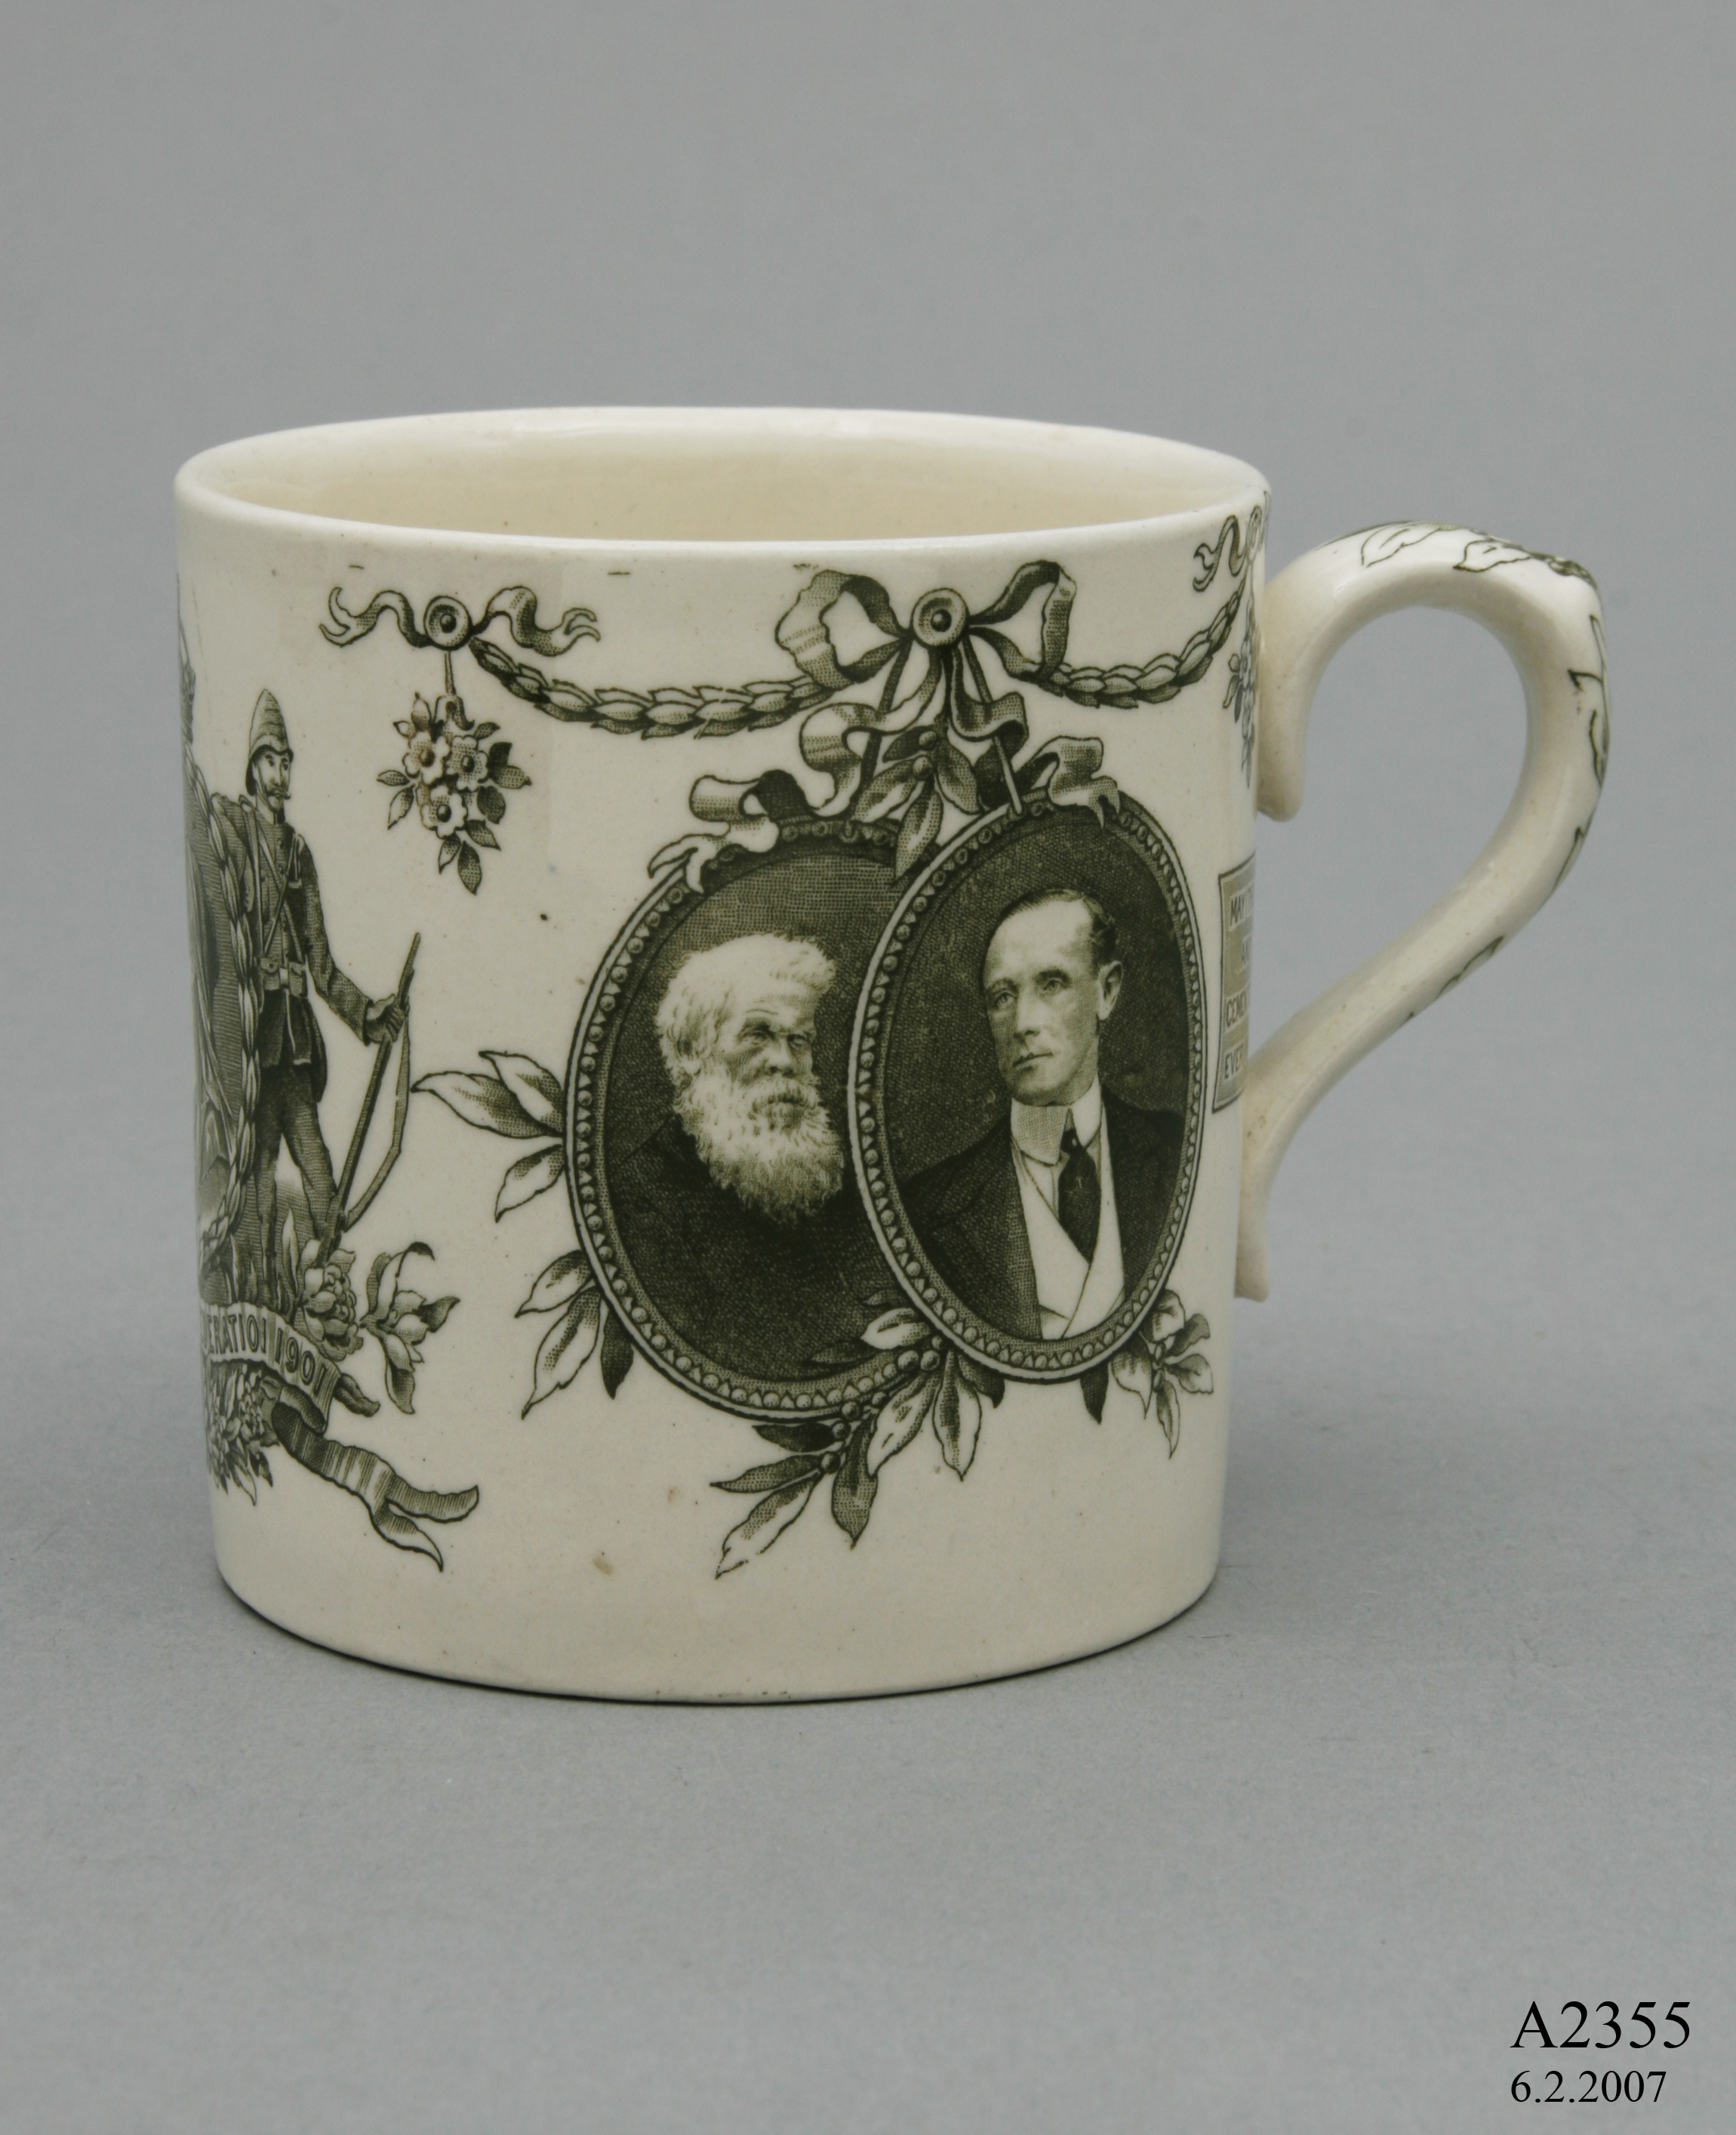 Commemorative earthenware mug made by Doulton & Co